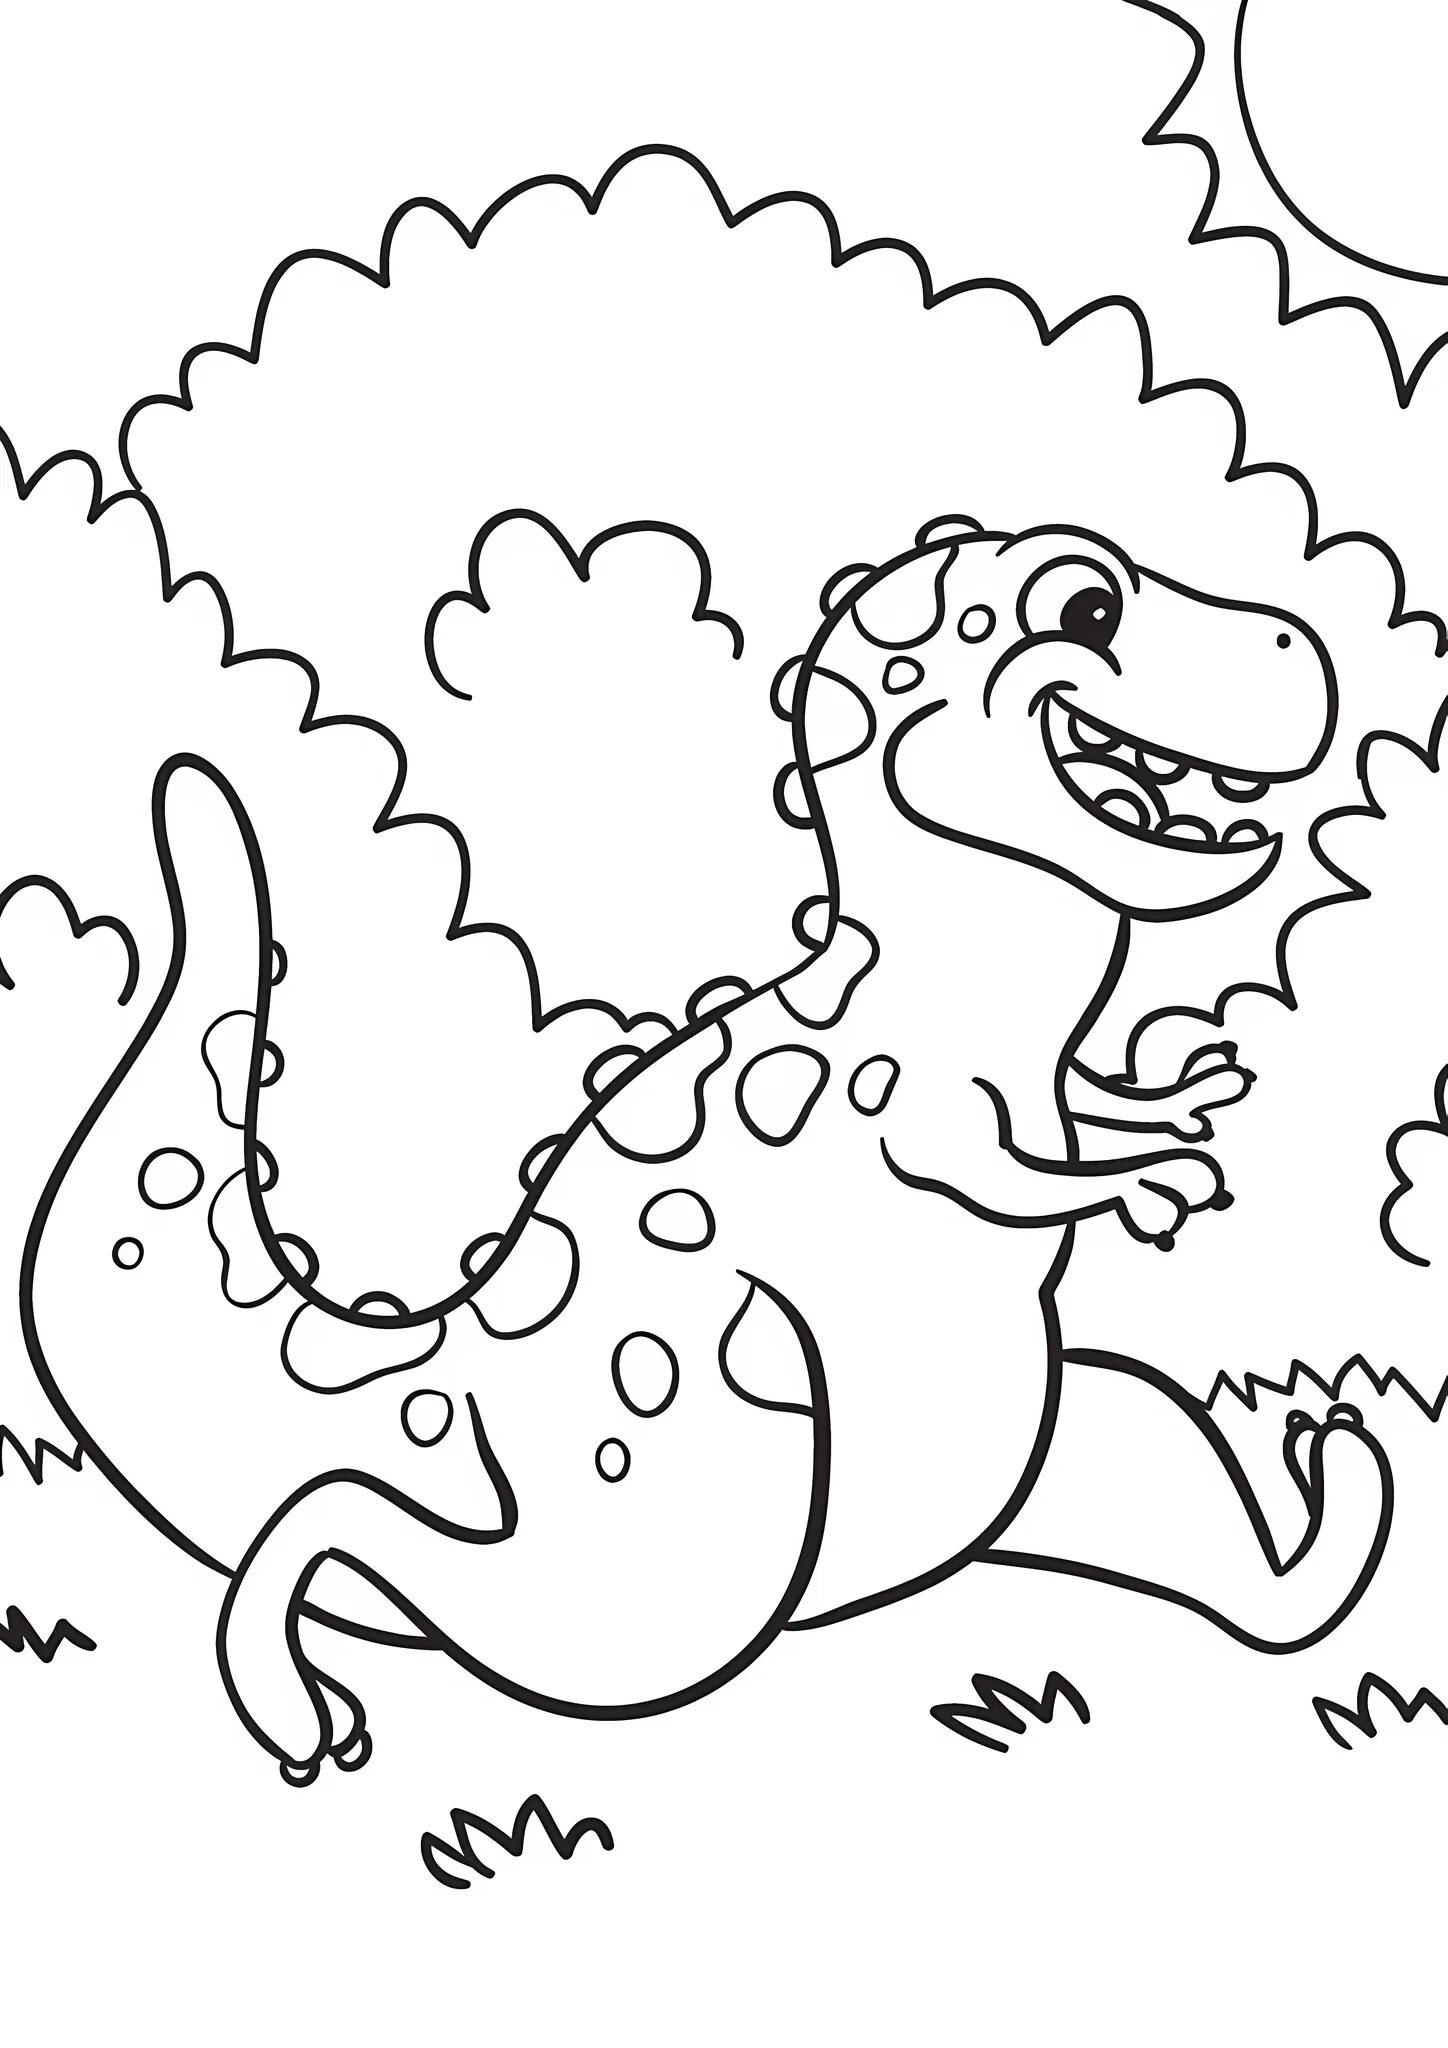 Динозавры раскраска а4. Динозавры / раскраска. Динозавр раскраска для детей. Динозаврики раскраска для детей. Динозавры картинки раскраски.